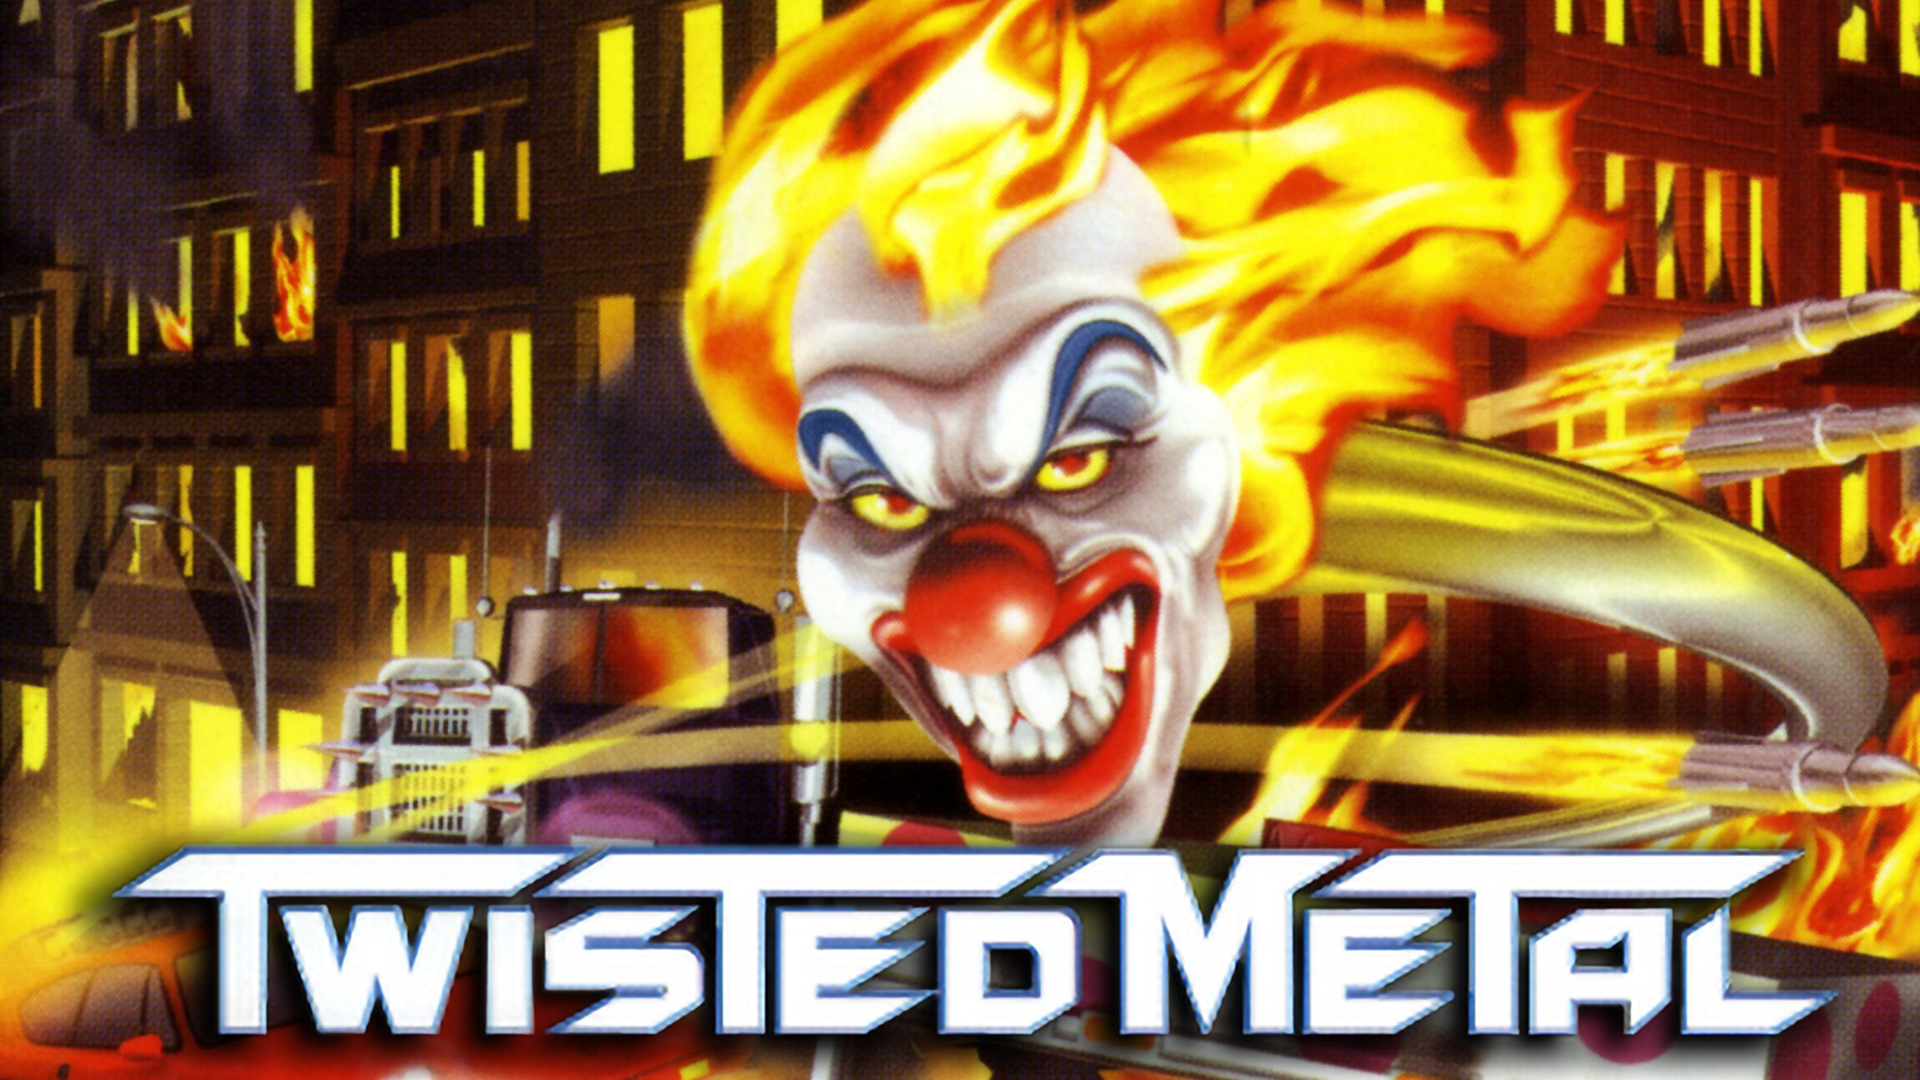 Twisted Metal 4 PS1, Calypso Gameplay Walkthrough